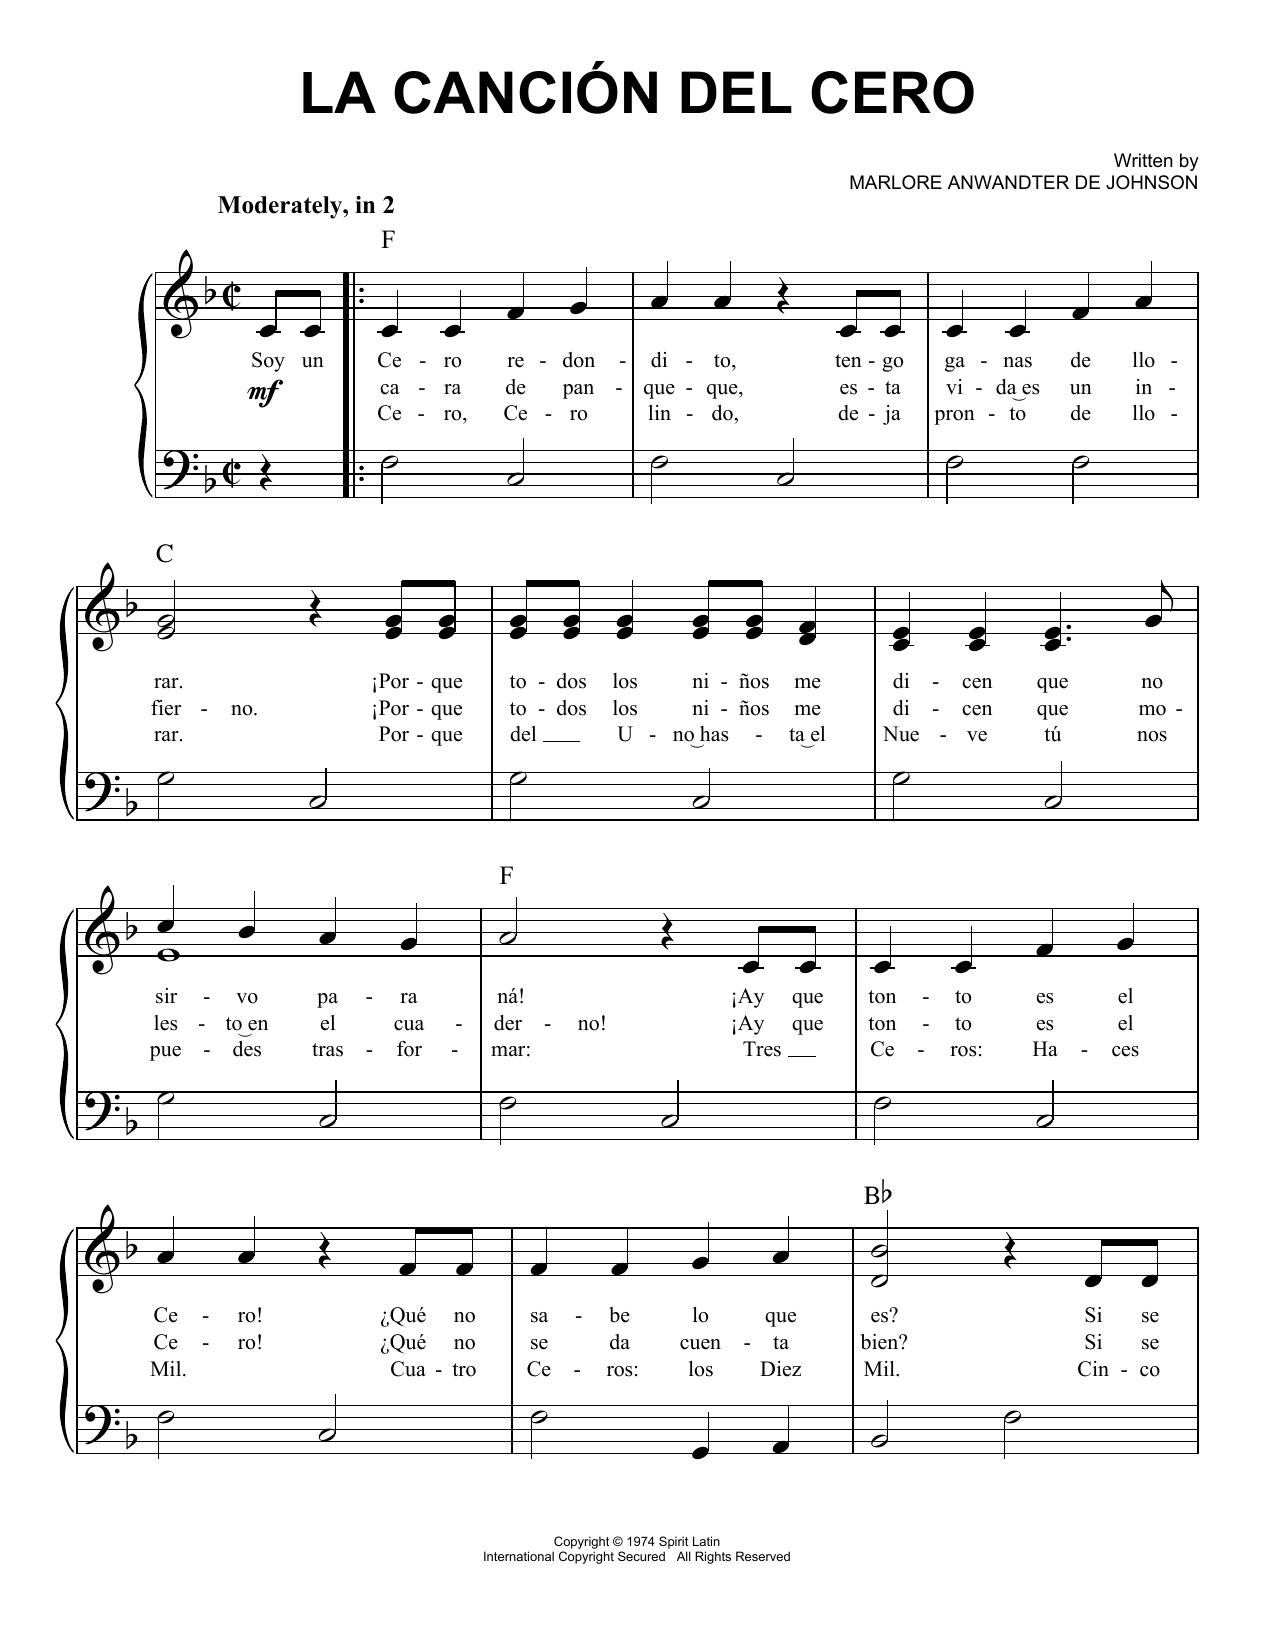 Marlore Anwandter de Johnson La Cancion Del Cero sheet music notes and chords arranged for Easy Piano